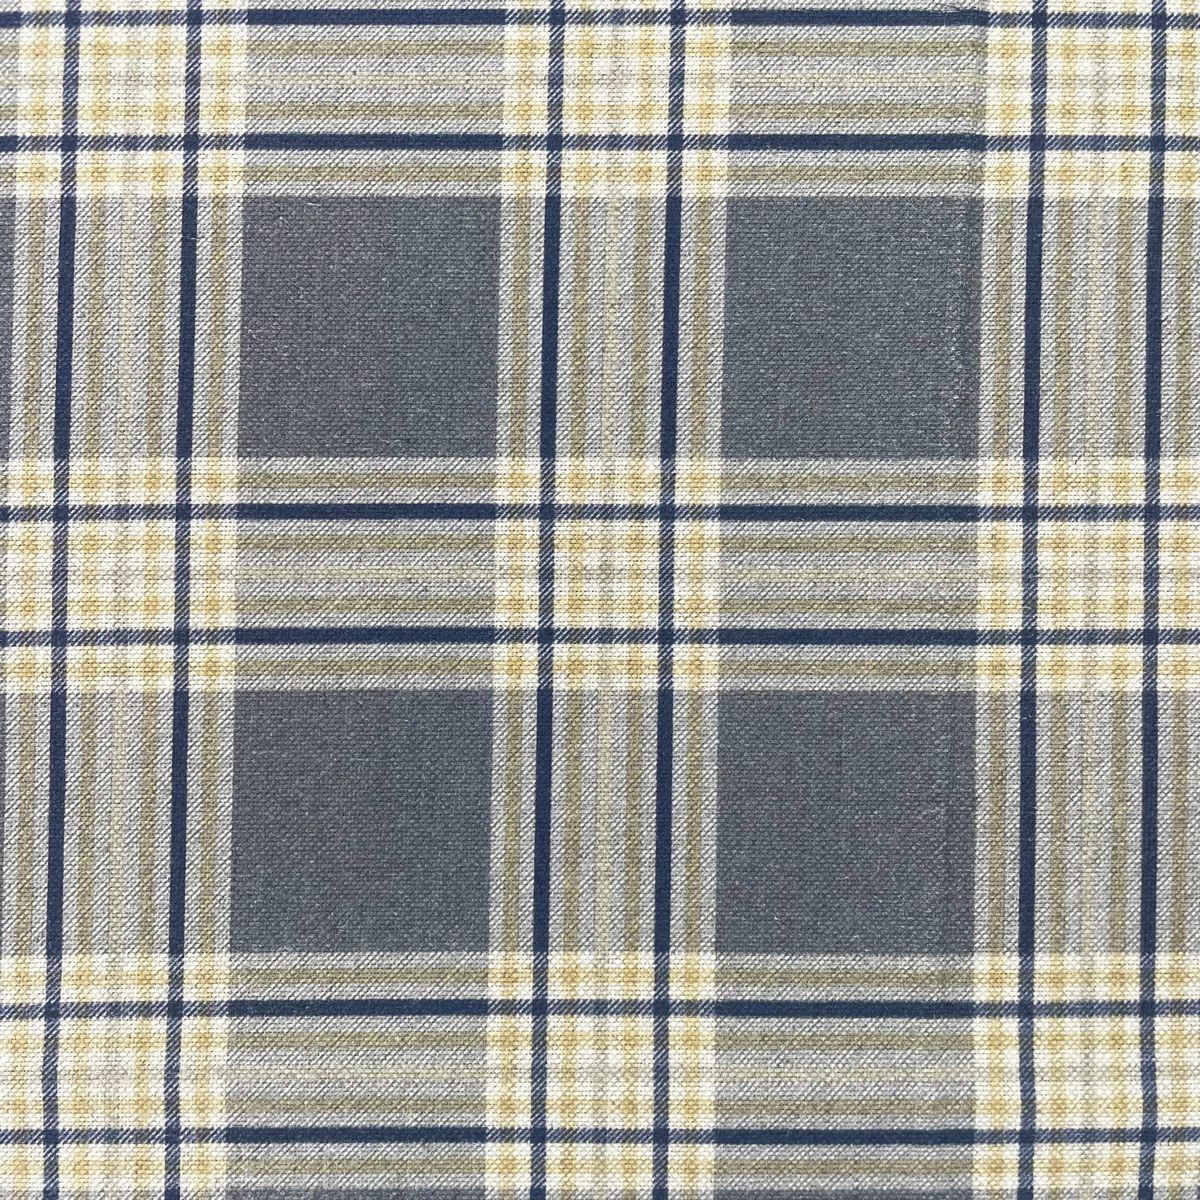 Lennox Buttercup Fabric by Chatham Glyn